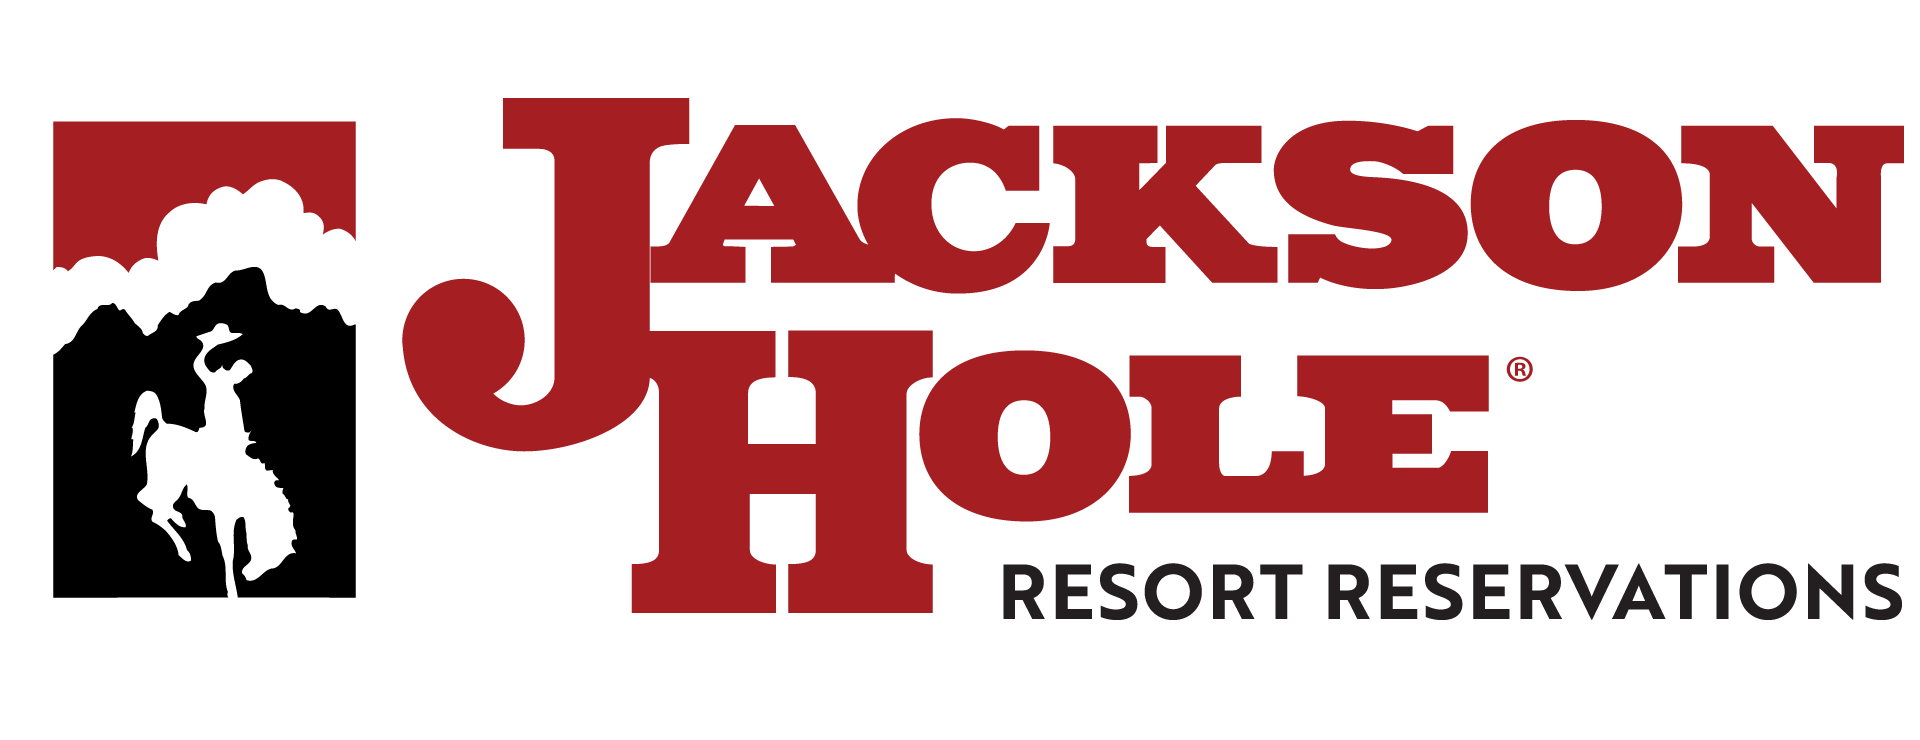 Jackson Hole Resort Reservations logo